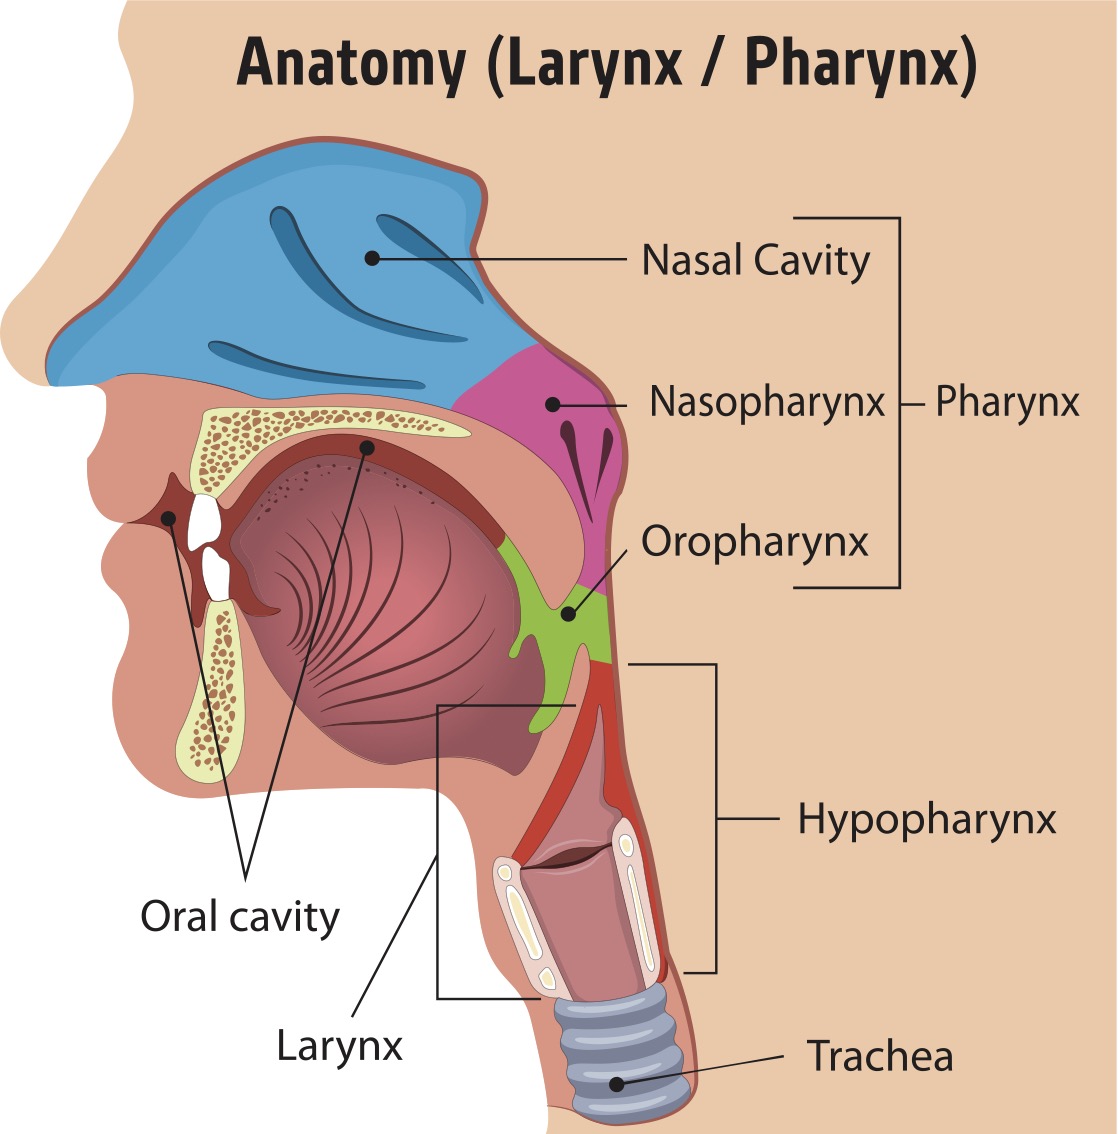 Anatomy of larynx/pharynx